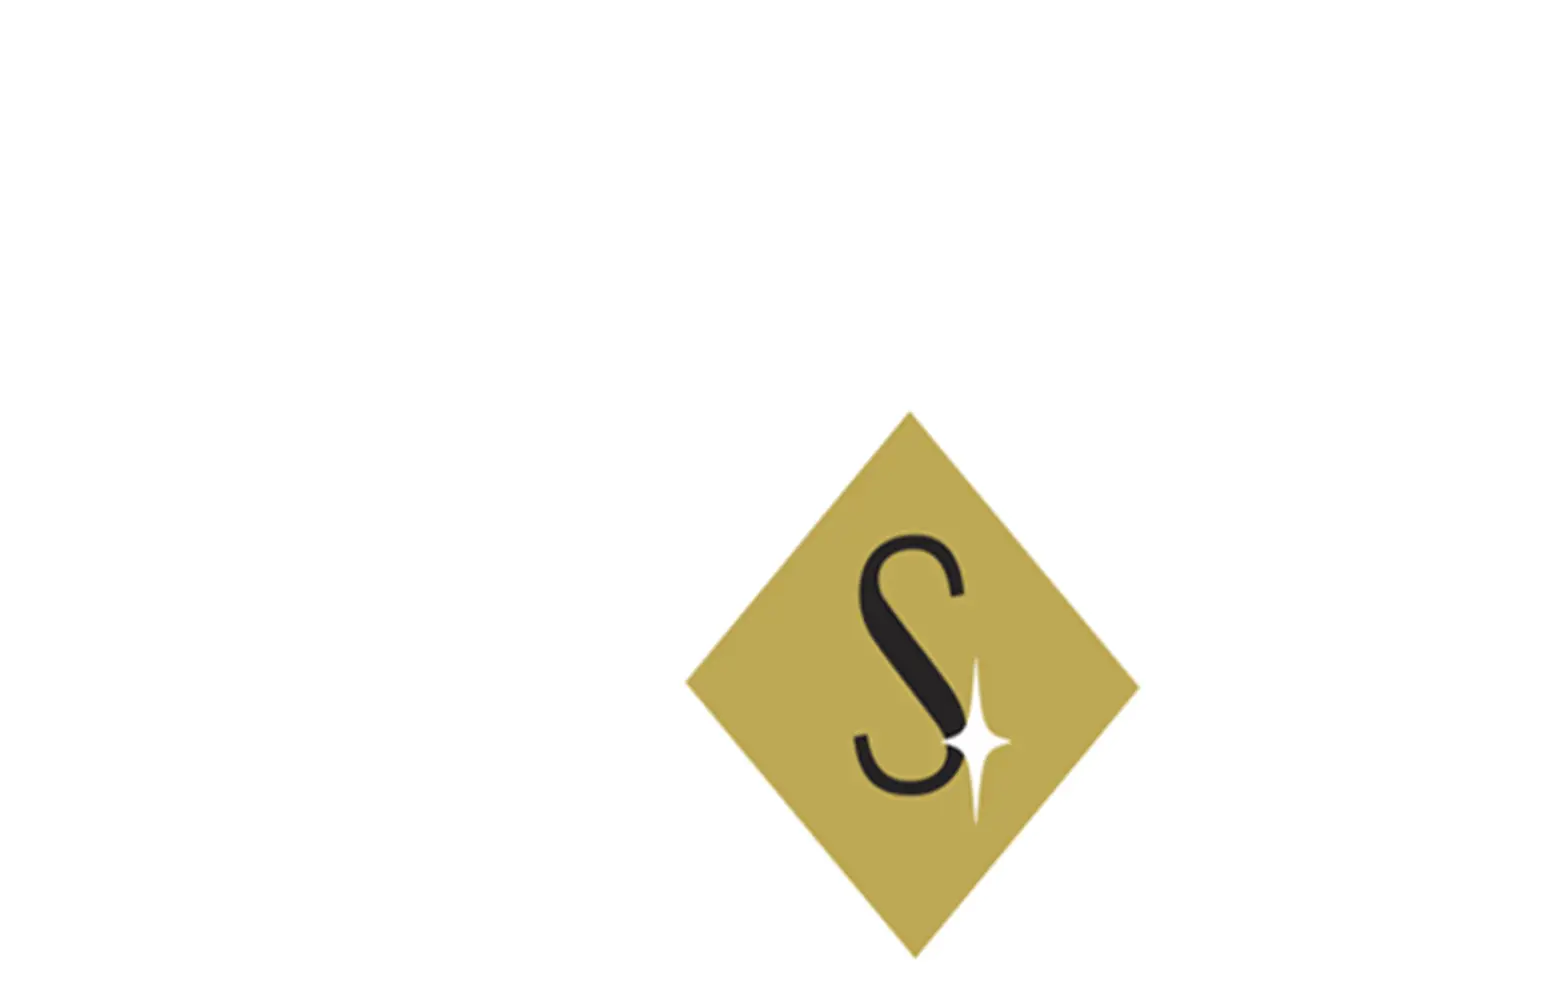 Introducing Swank Cafe